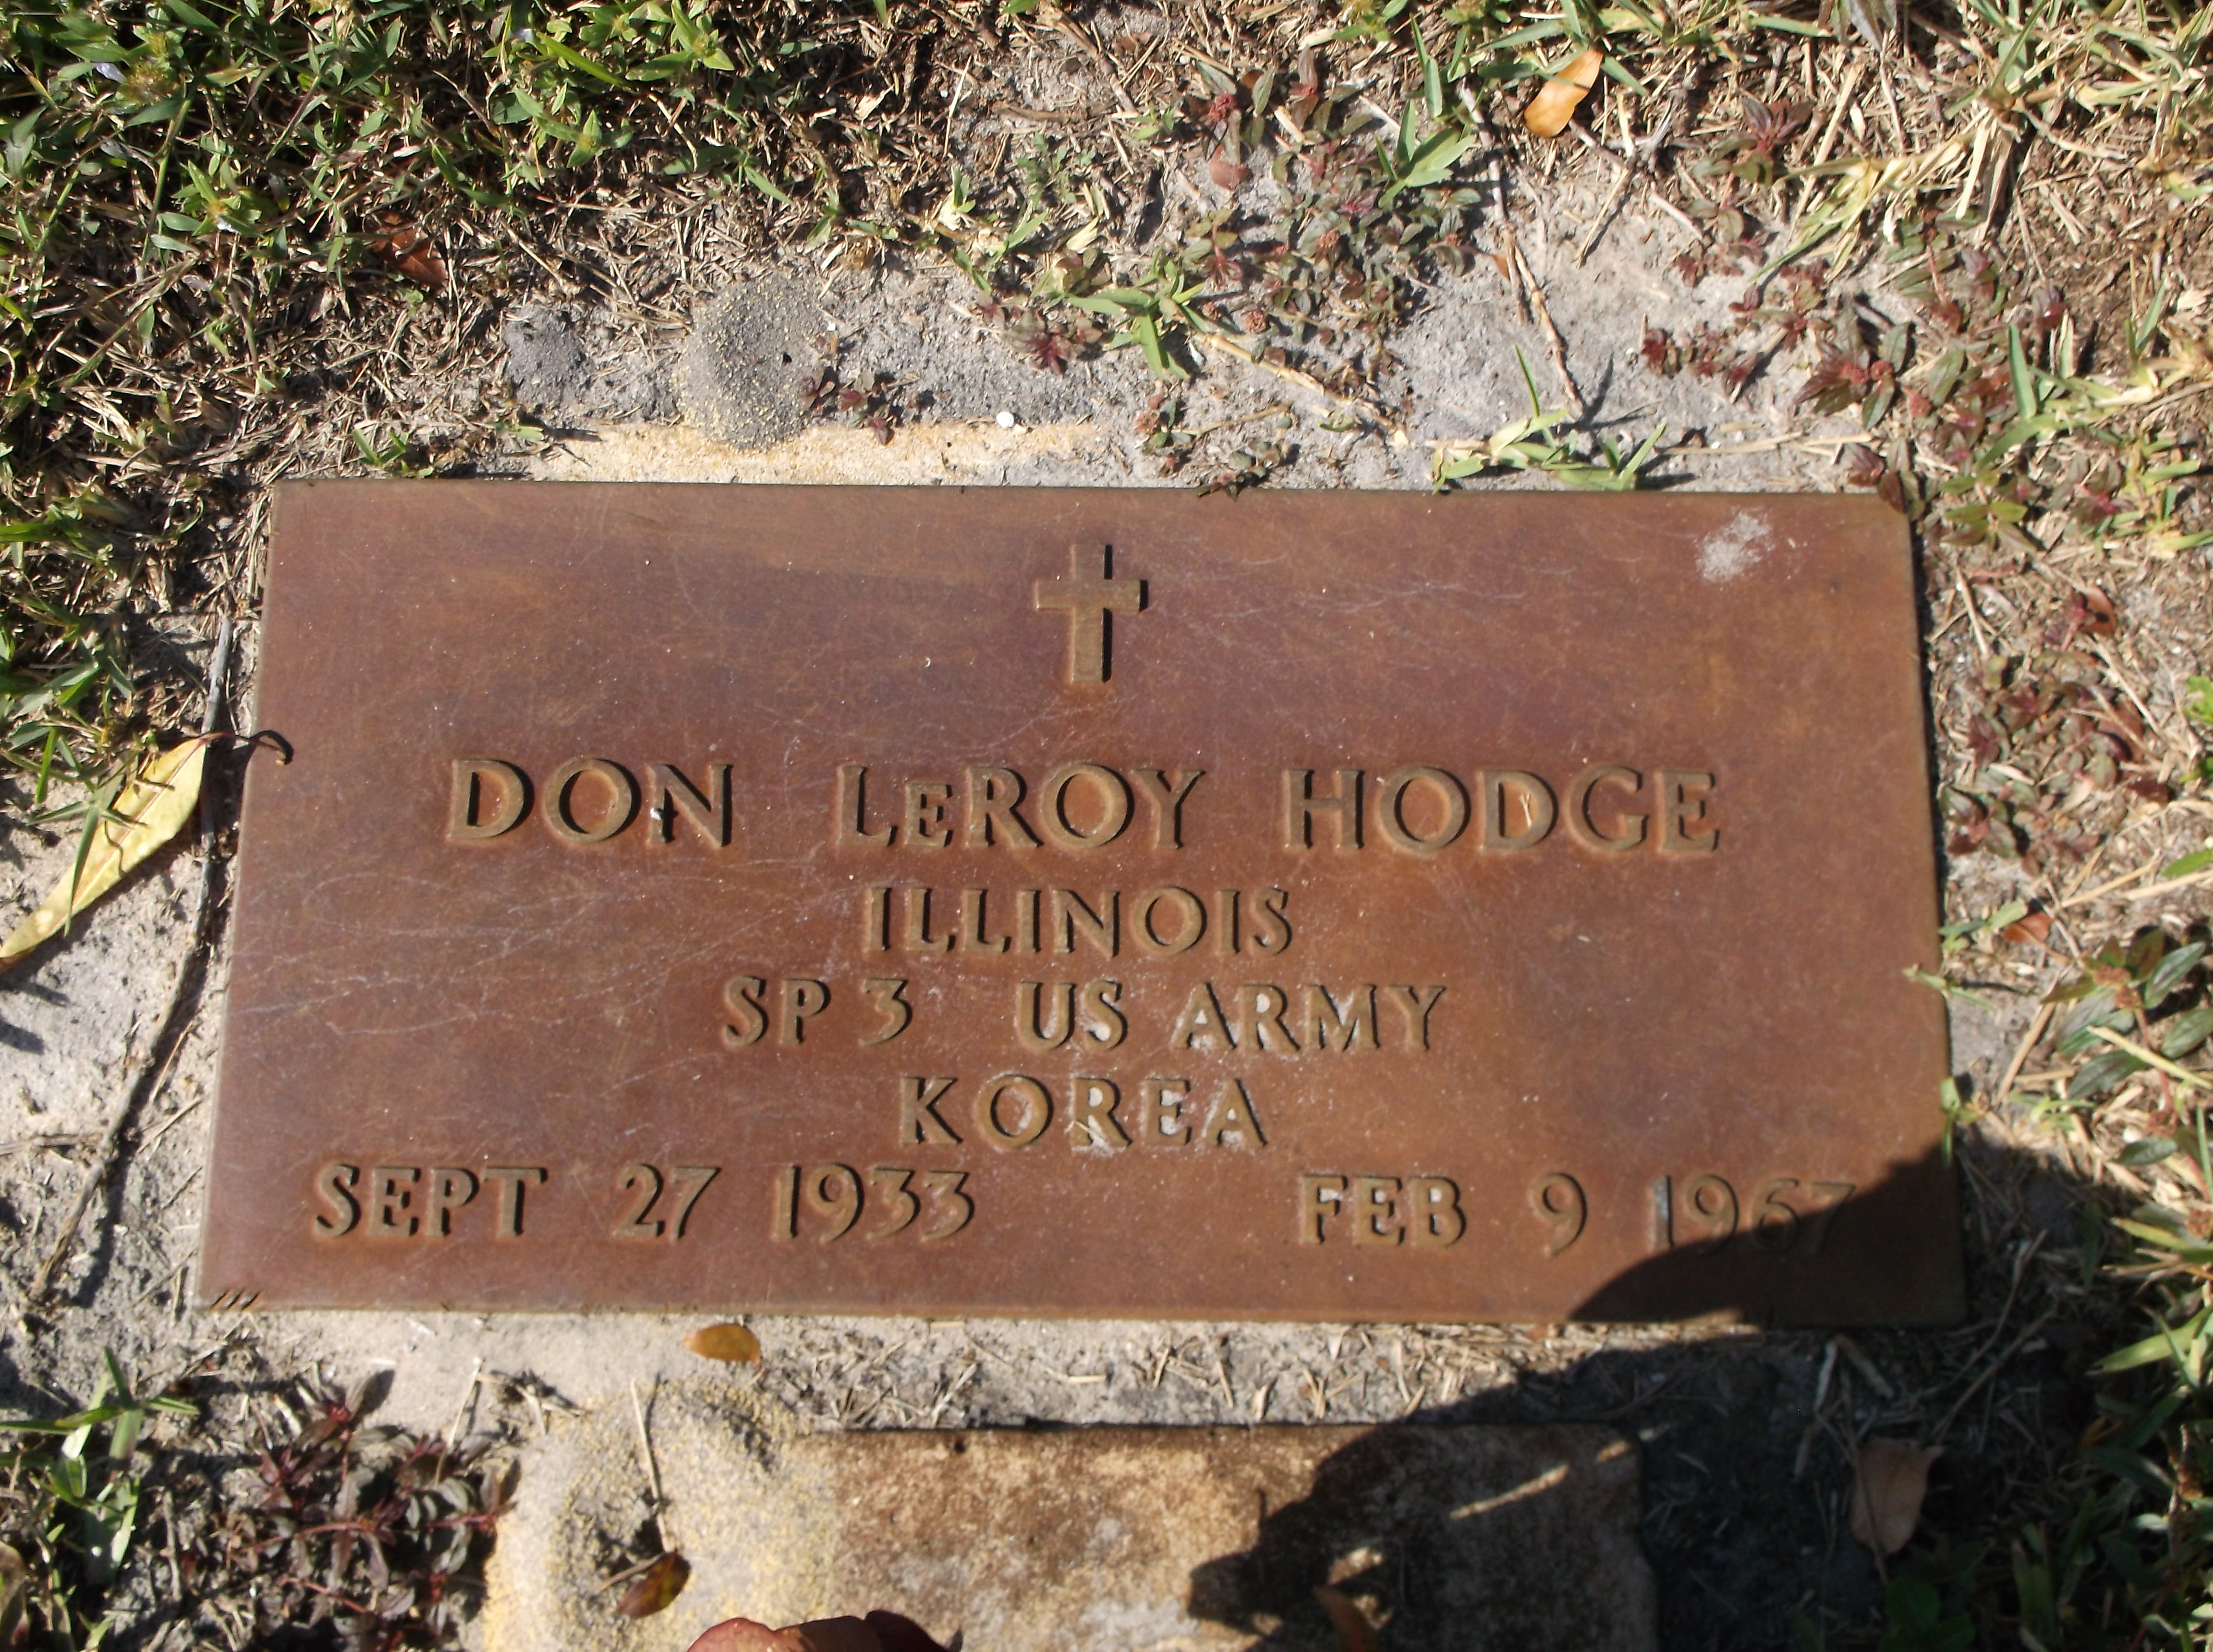 Don LeRoy Hodge